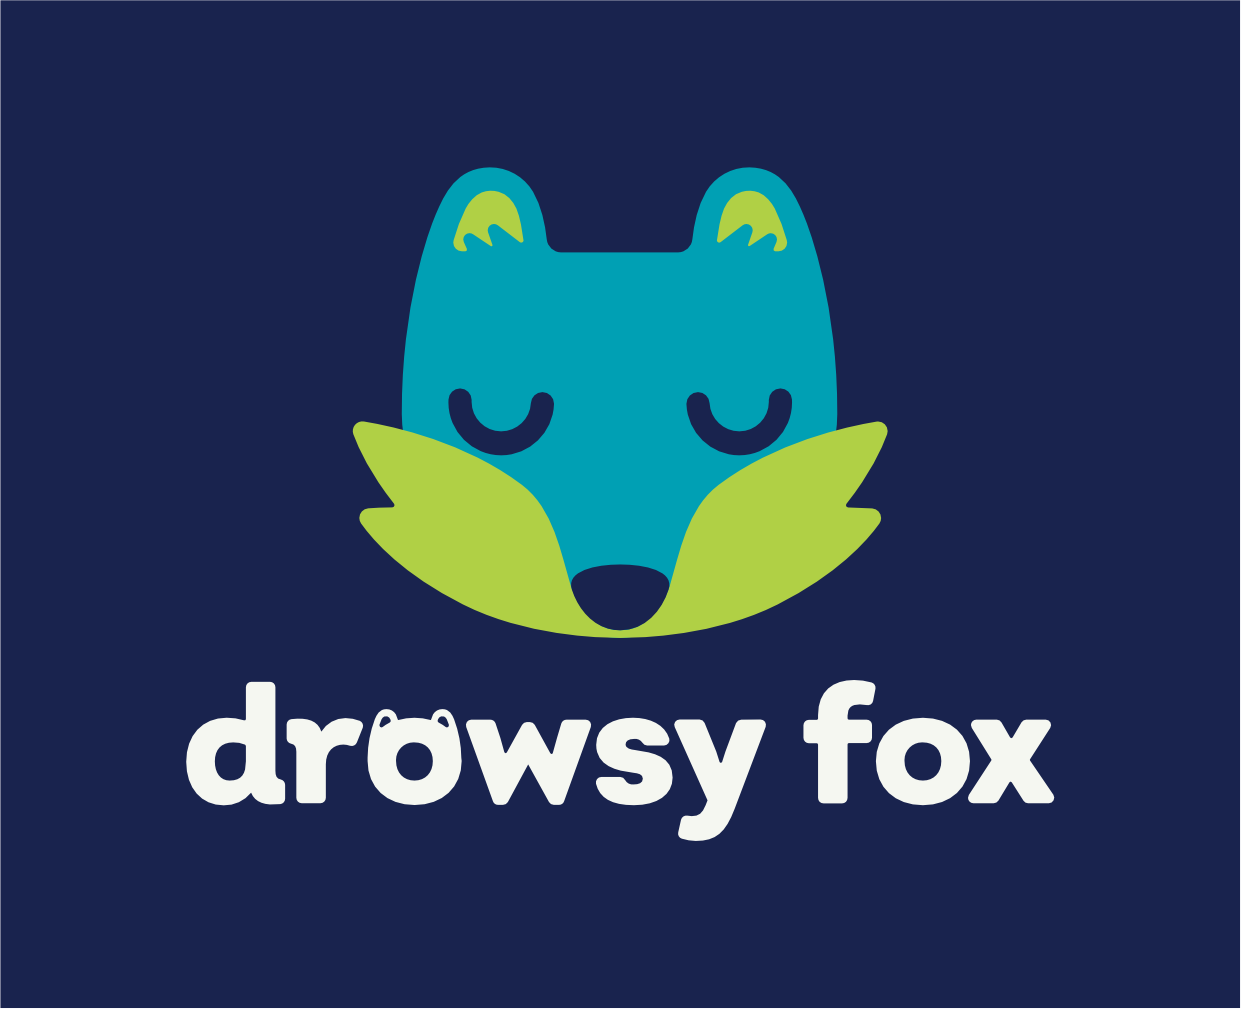 the dark theme drowsy fox logo